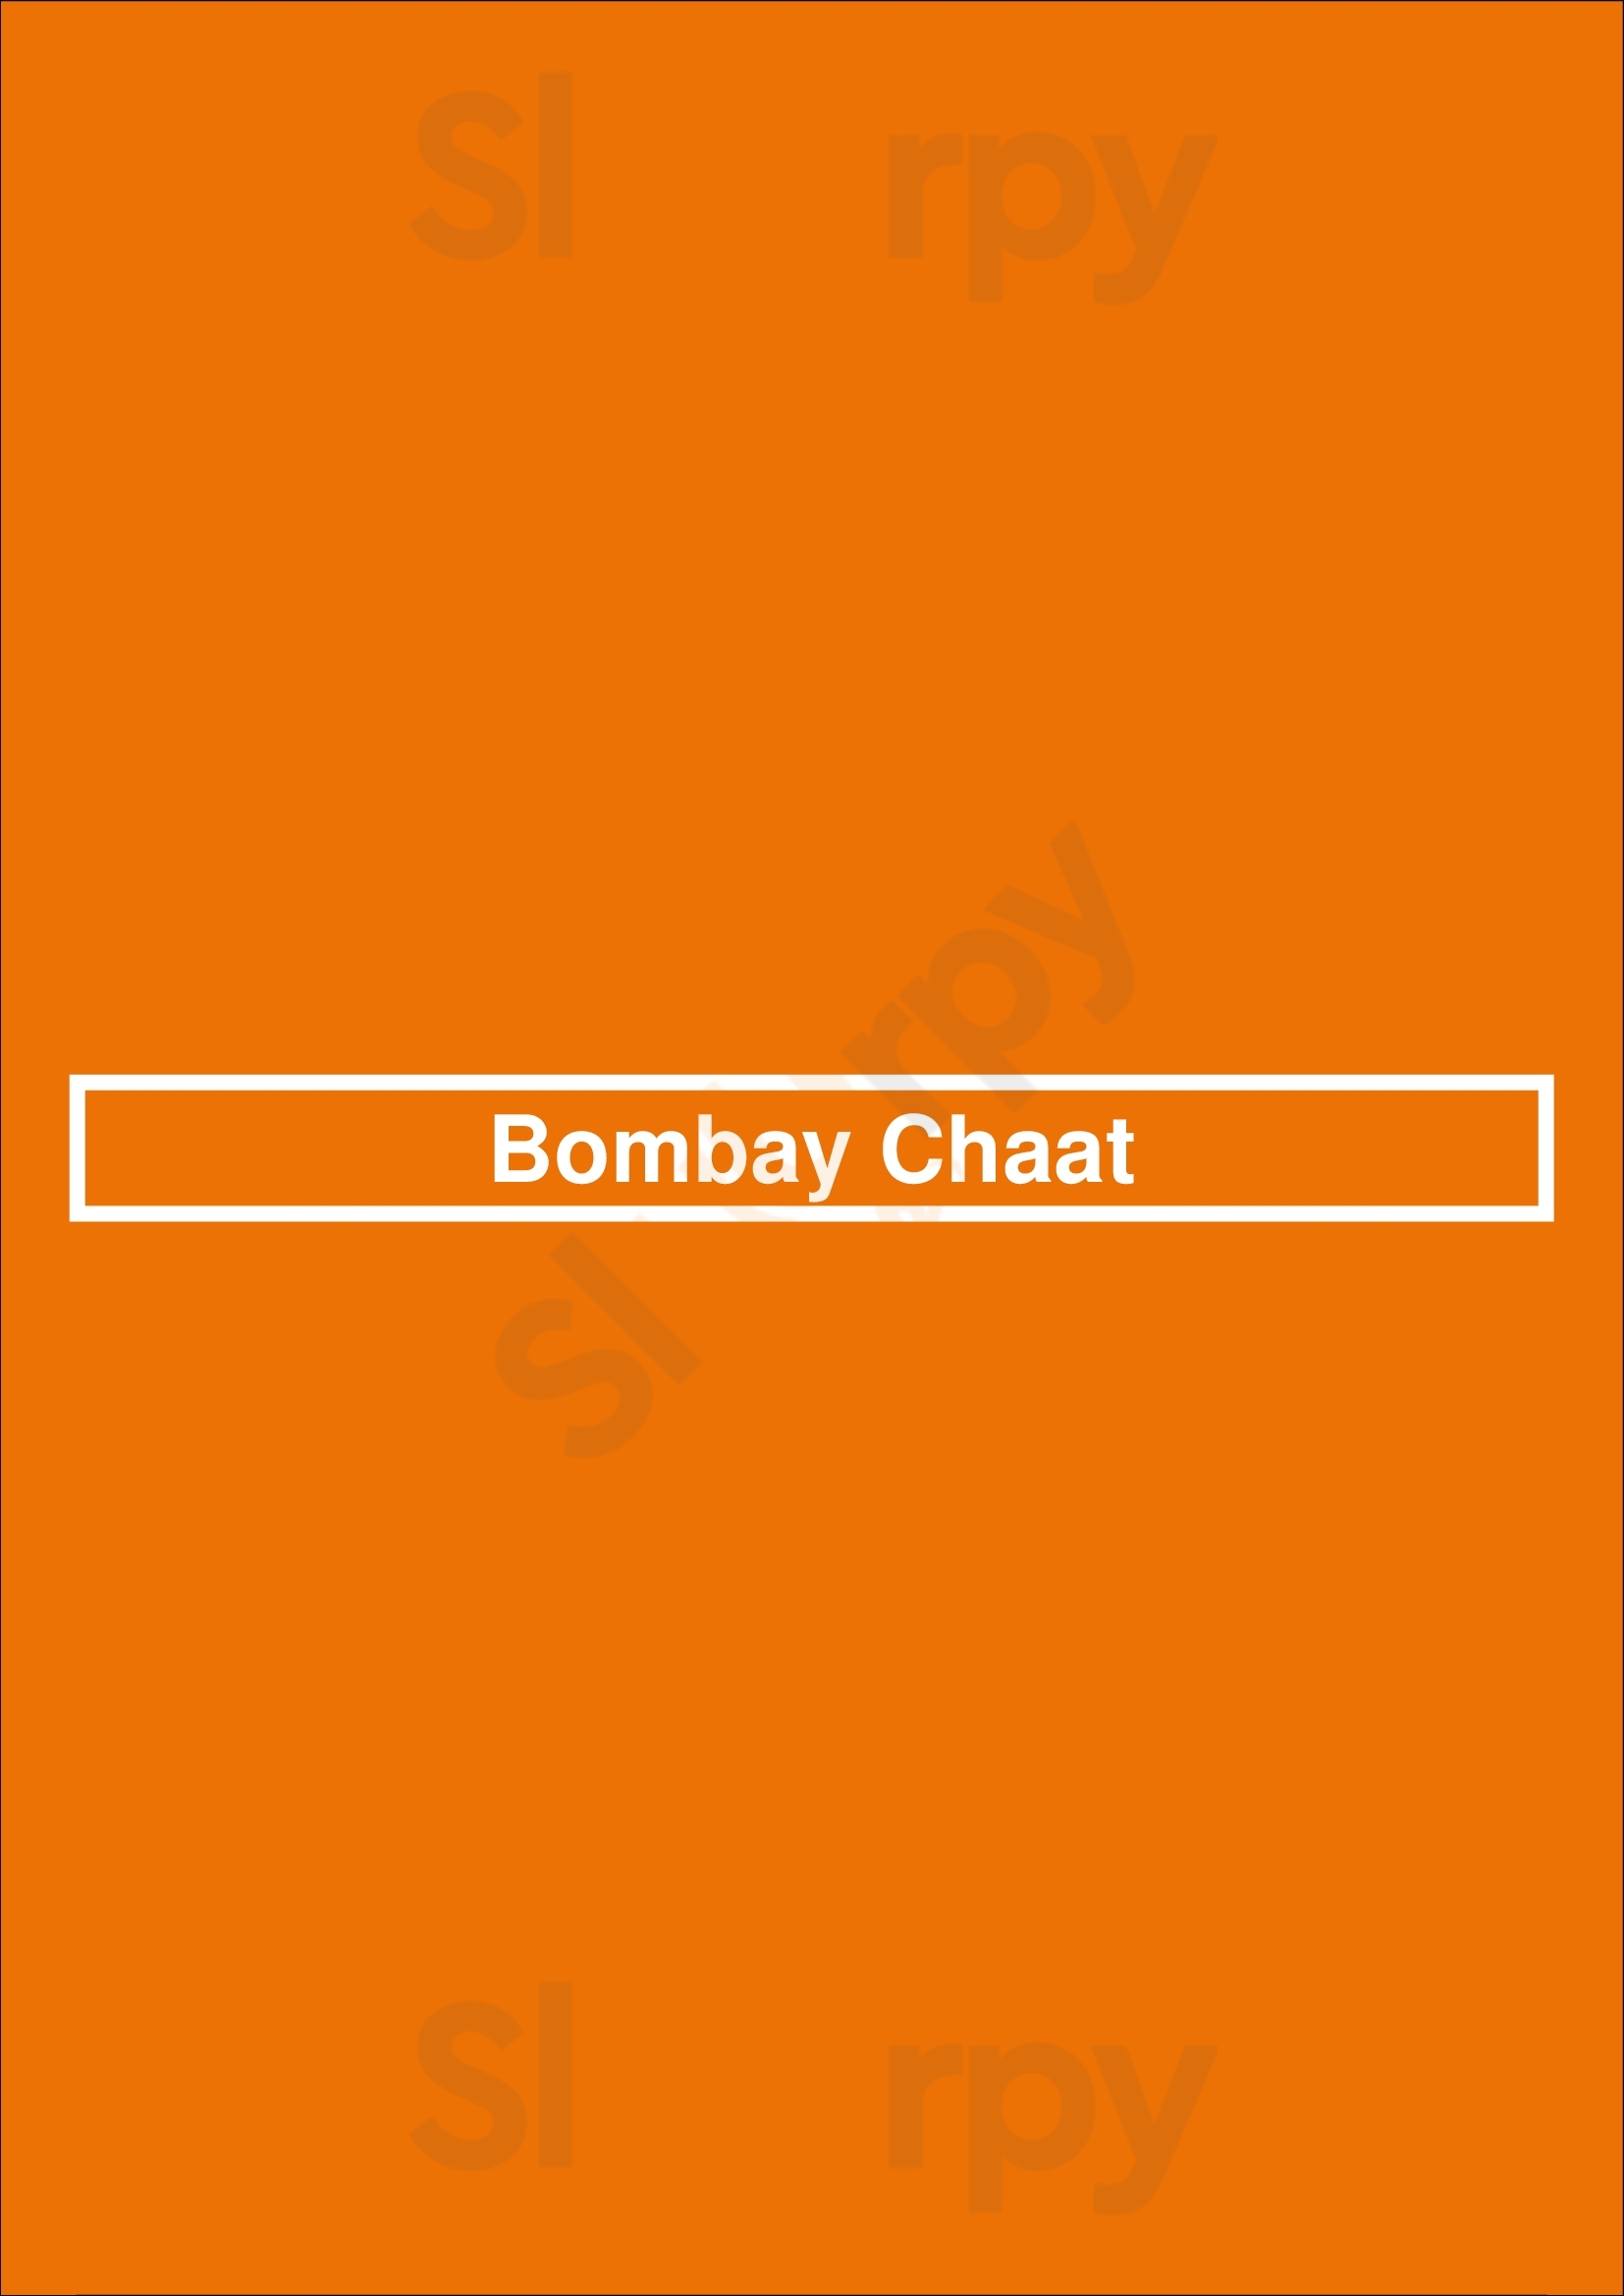 Bombay Chaat Cleveland Menu - 1